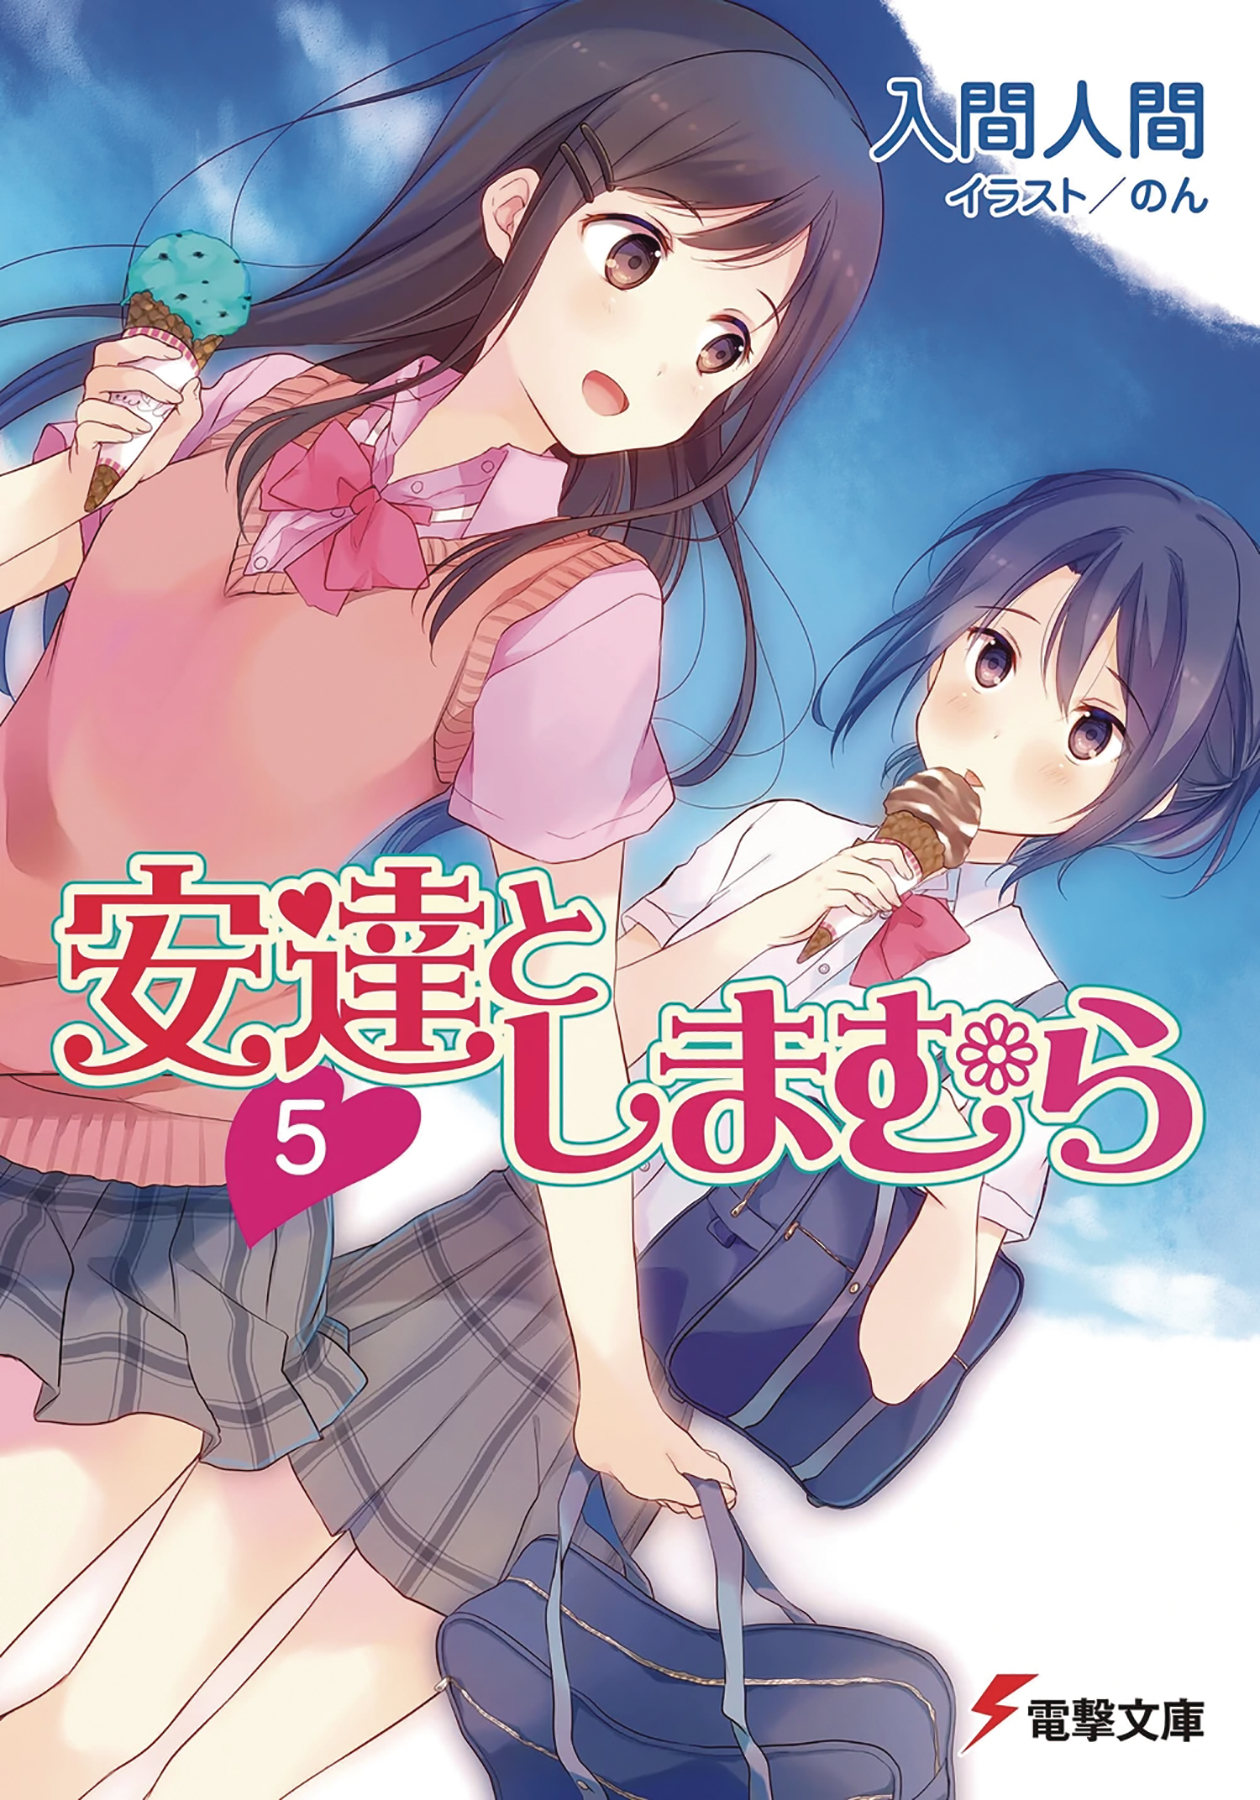 Yuri Girls - Novel, Manga & Anime Adachi and Shimamura